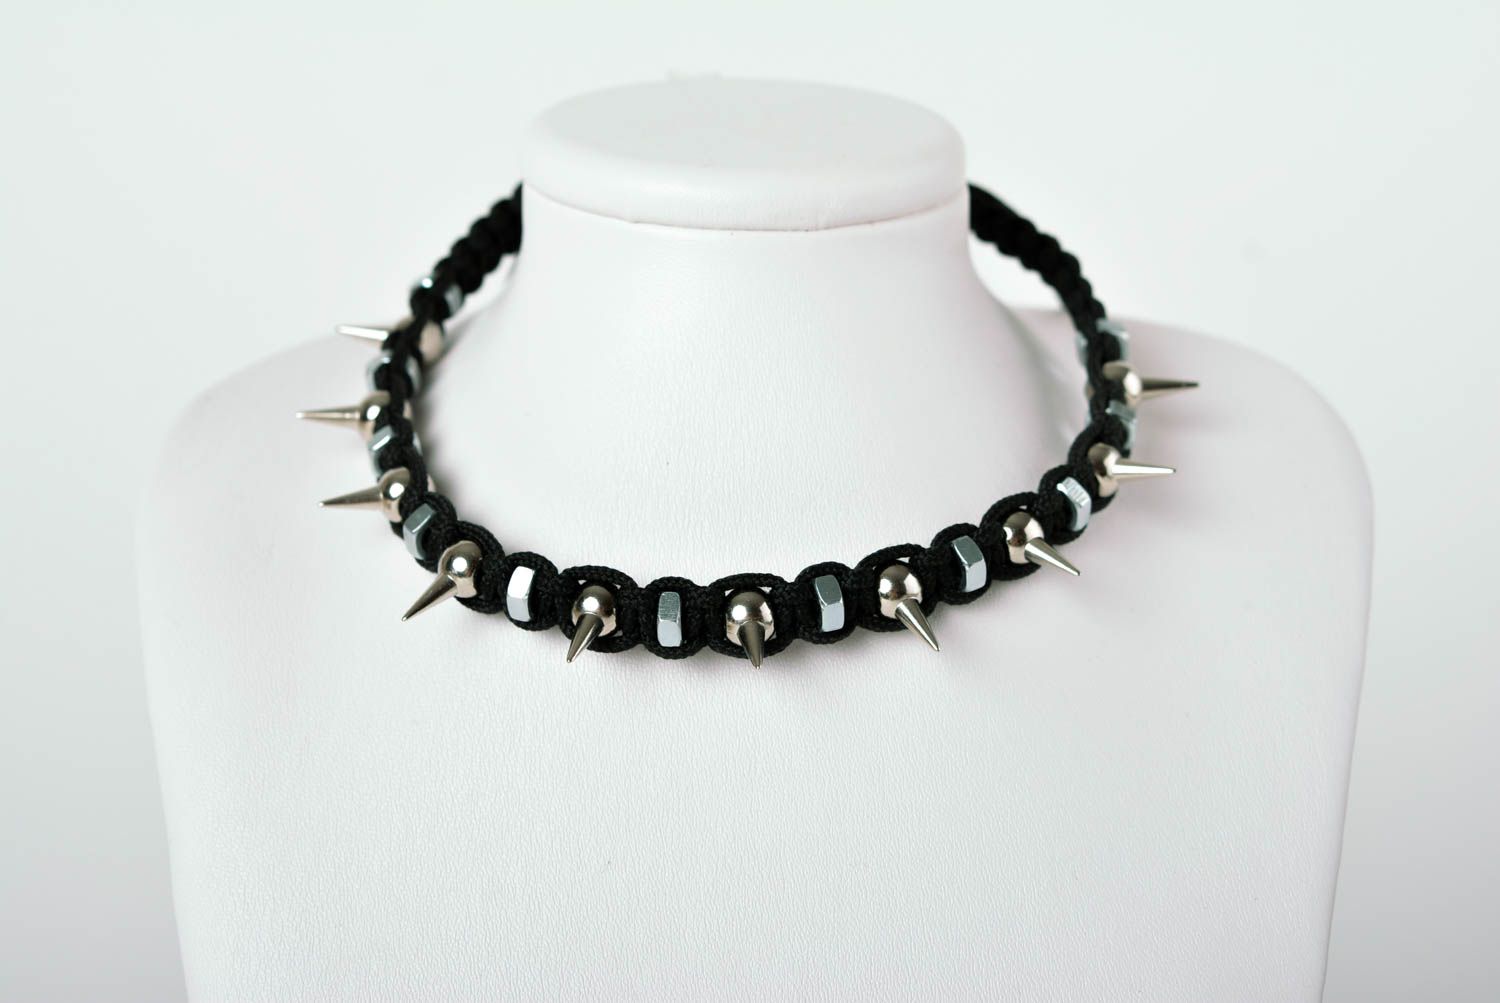 Spike necklace handmade necklace macrame necklace handmade stylish jewelry  photo 2